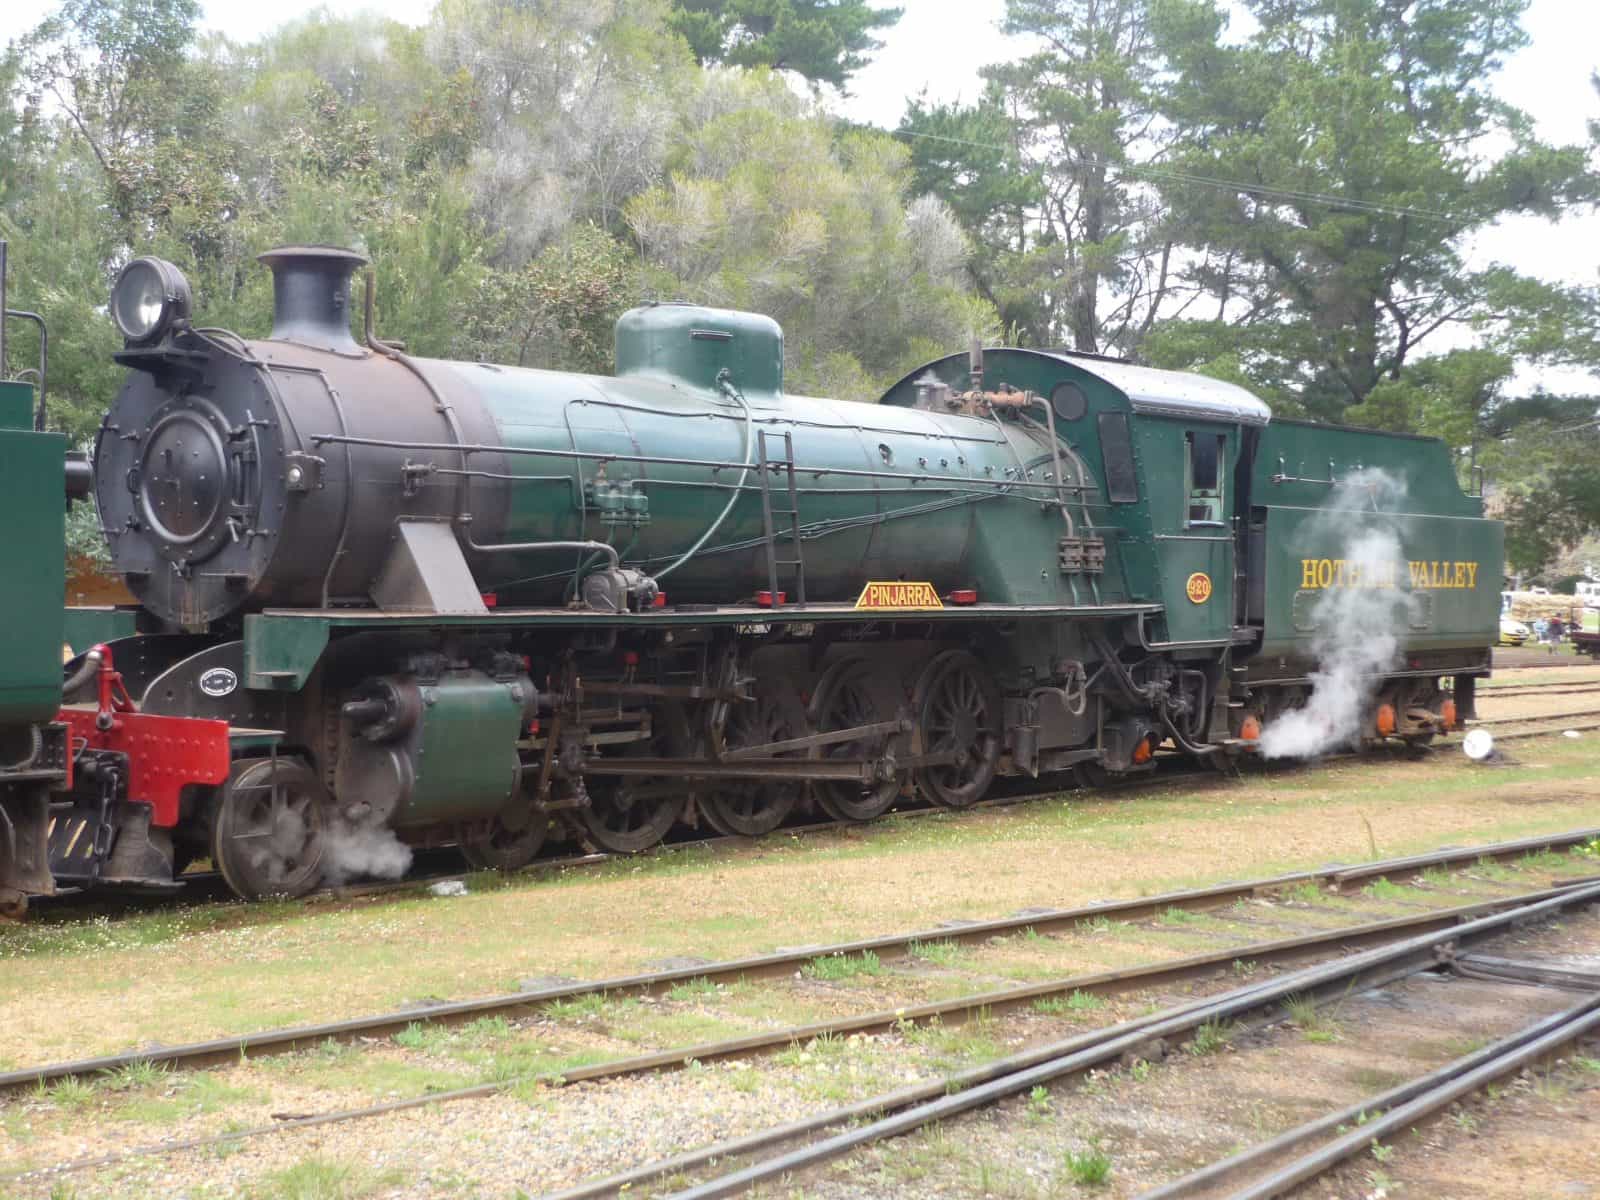 Hotham Valley Railway, Dwellingup, Western Australia